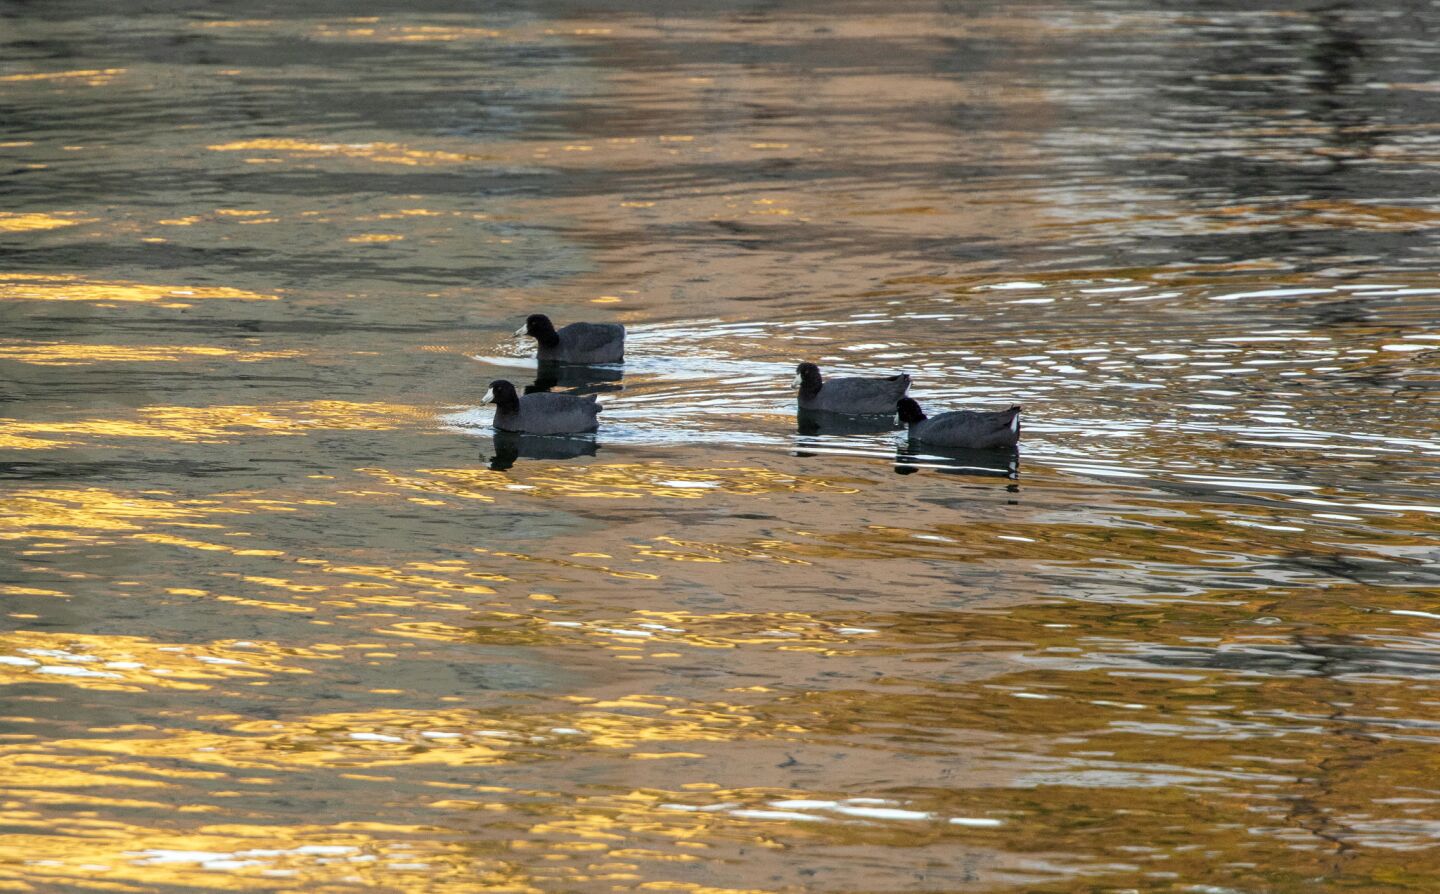 More wildlife: Coots enjoying the reservoir.